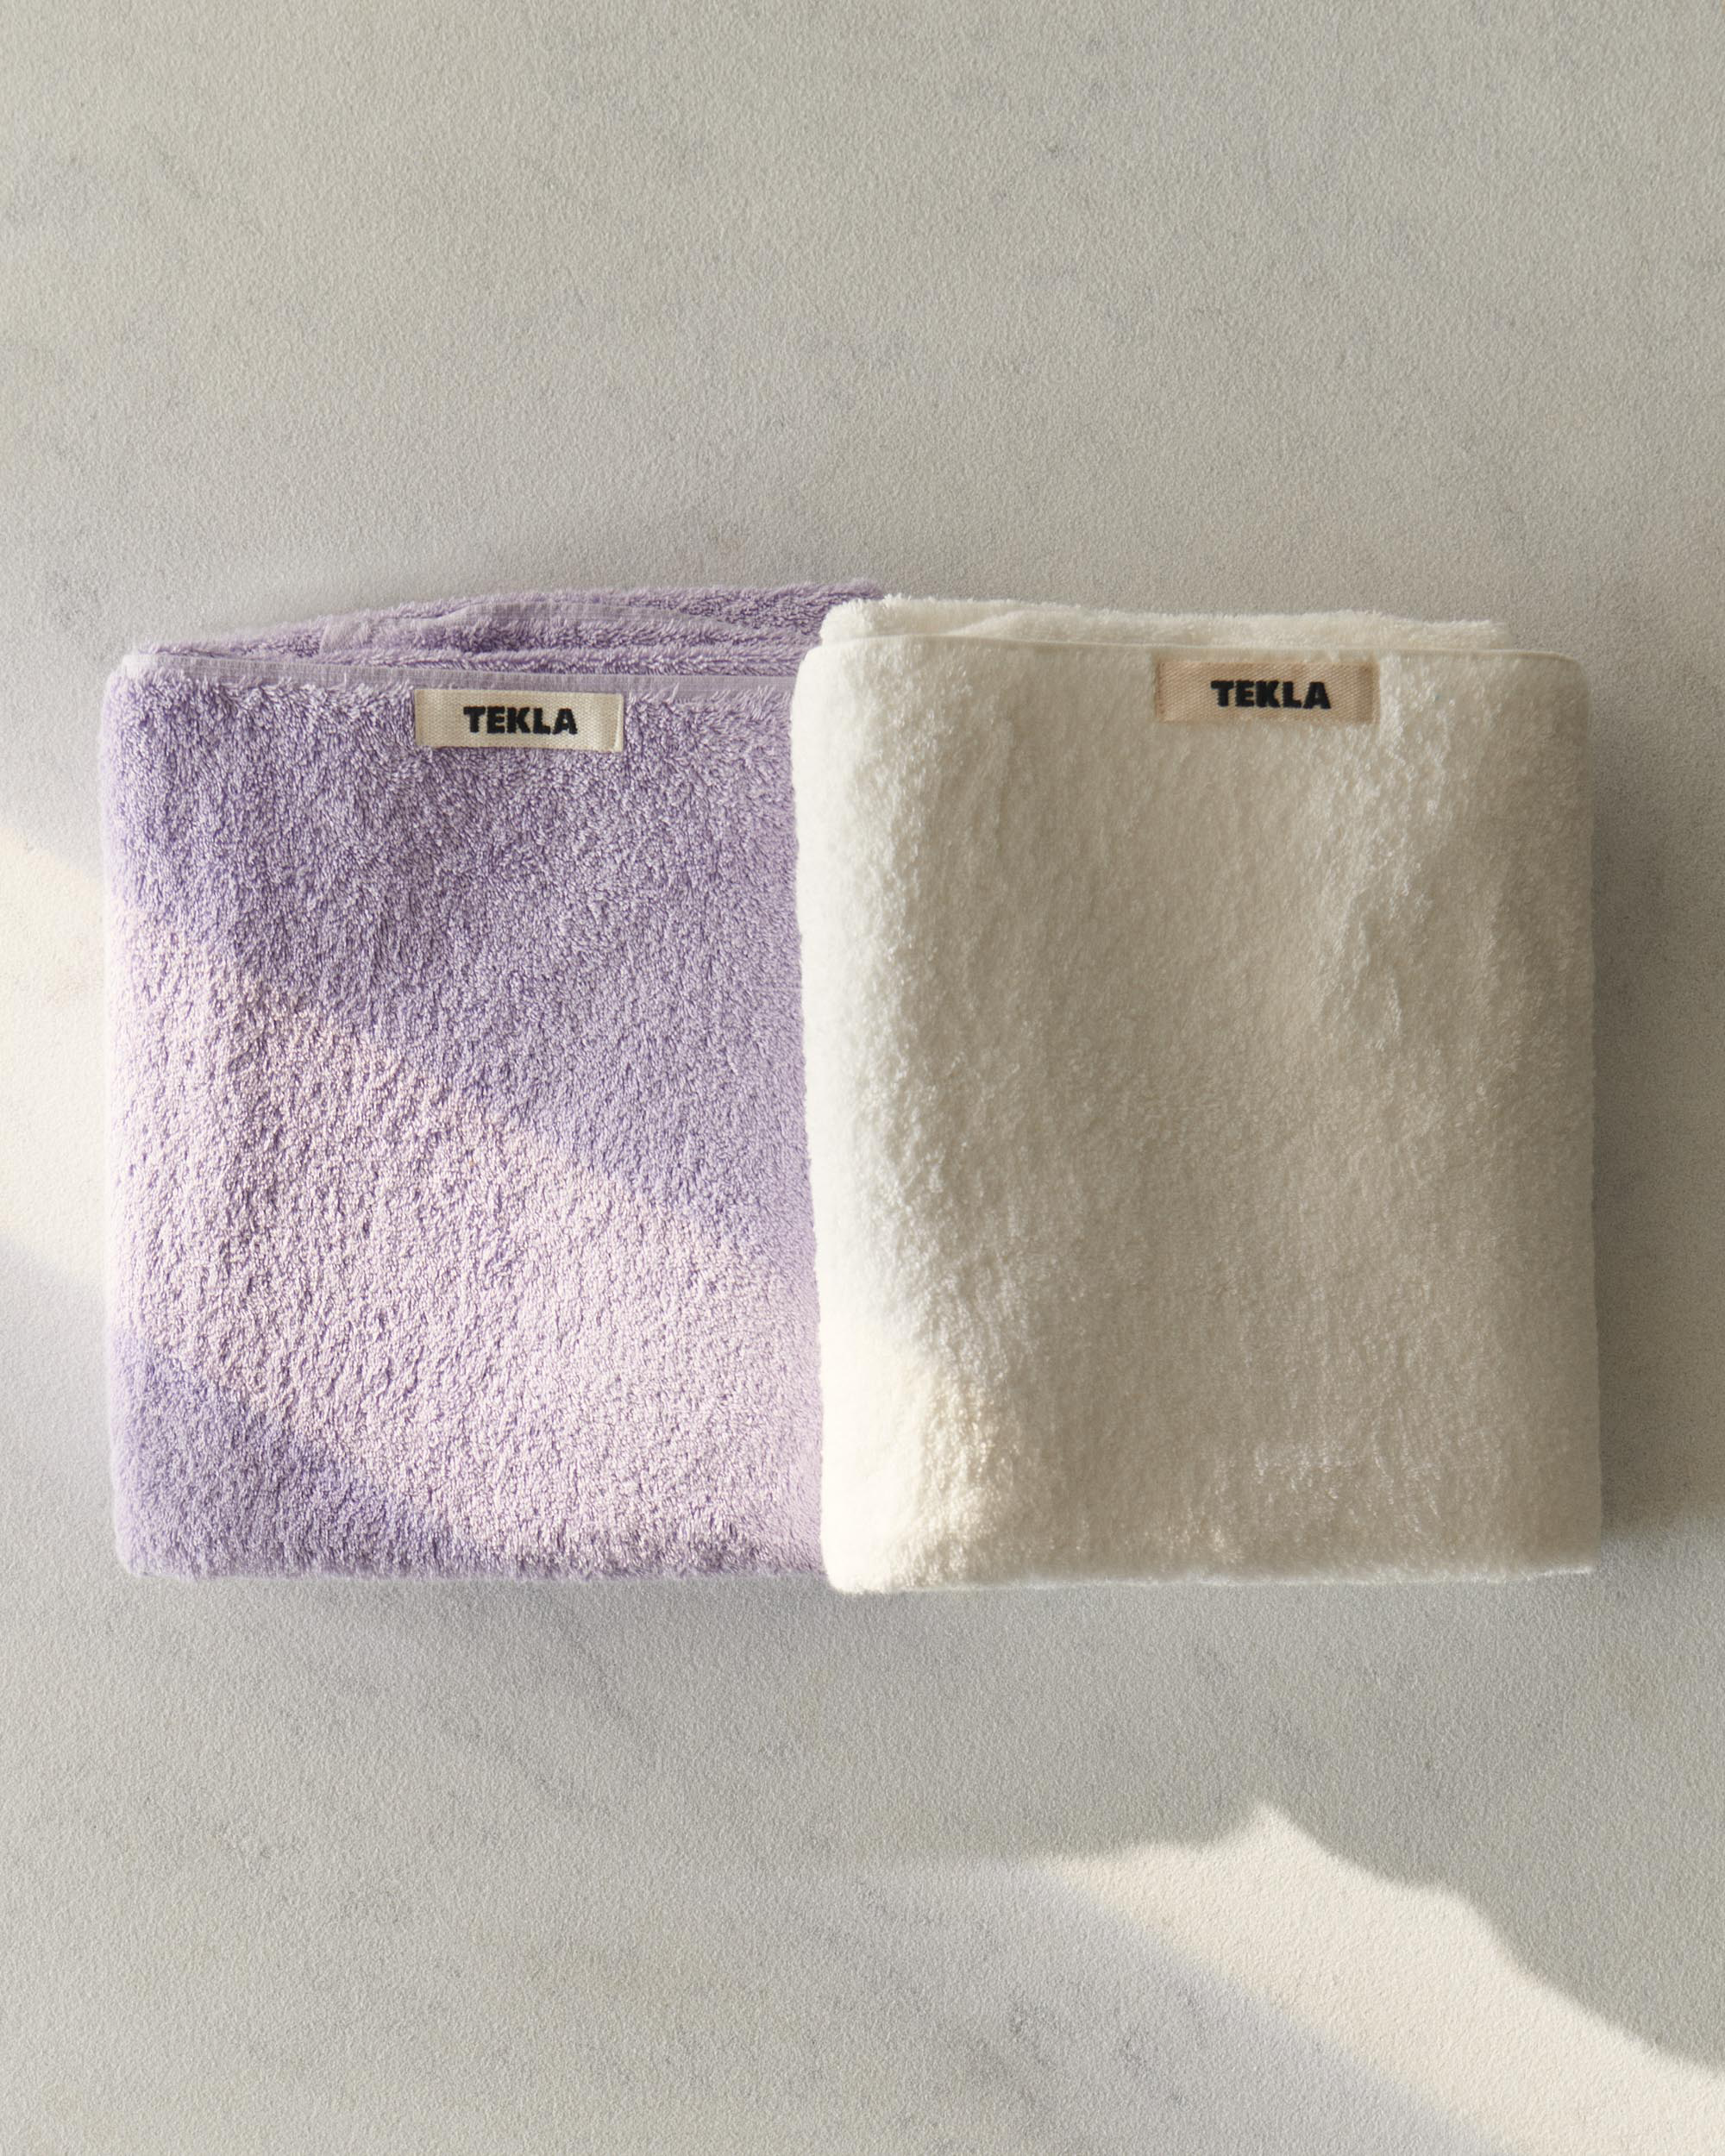 Hand Towel (Solid) - Lavender